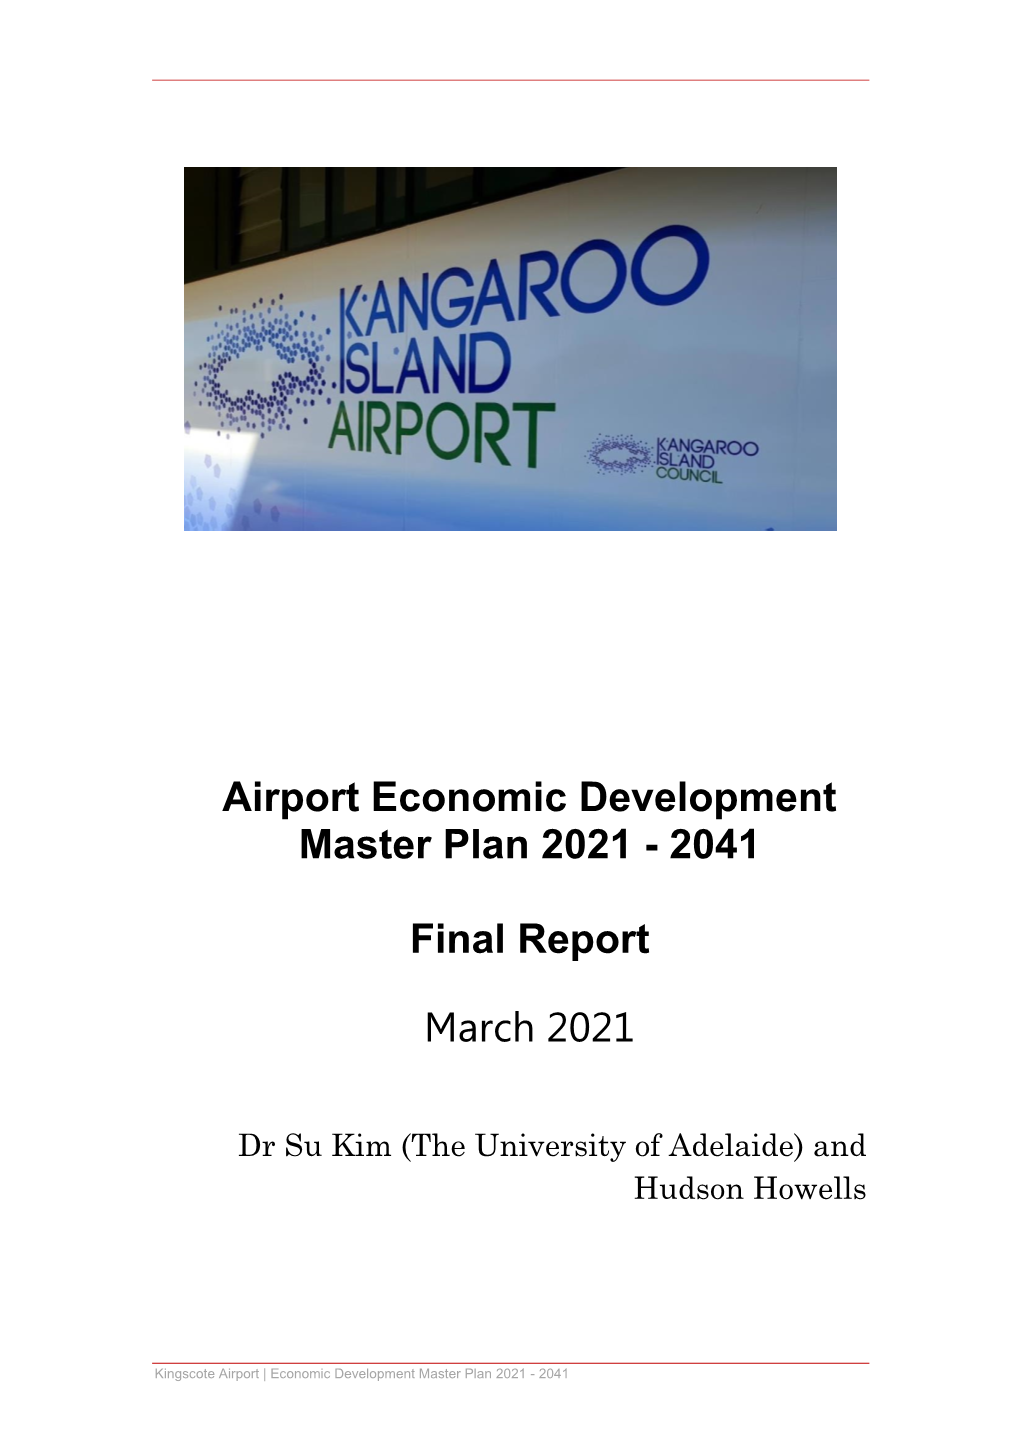 Airport Economic Development Master Plan 2021 - 2041